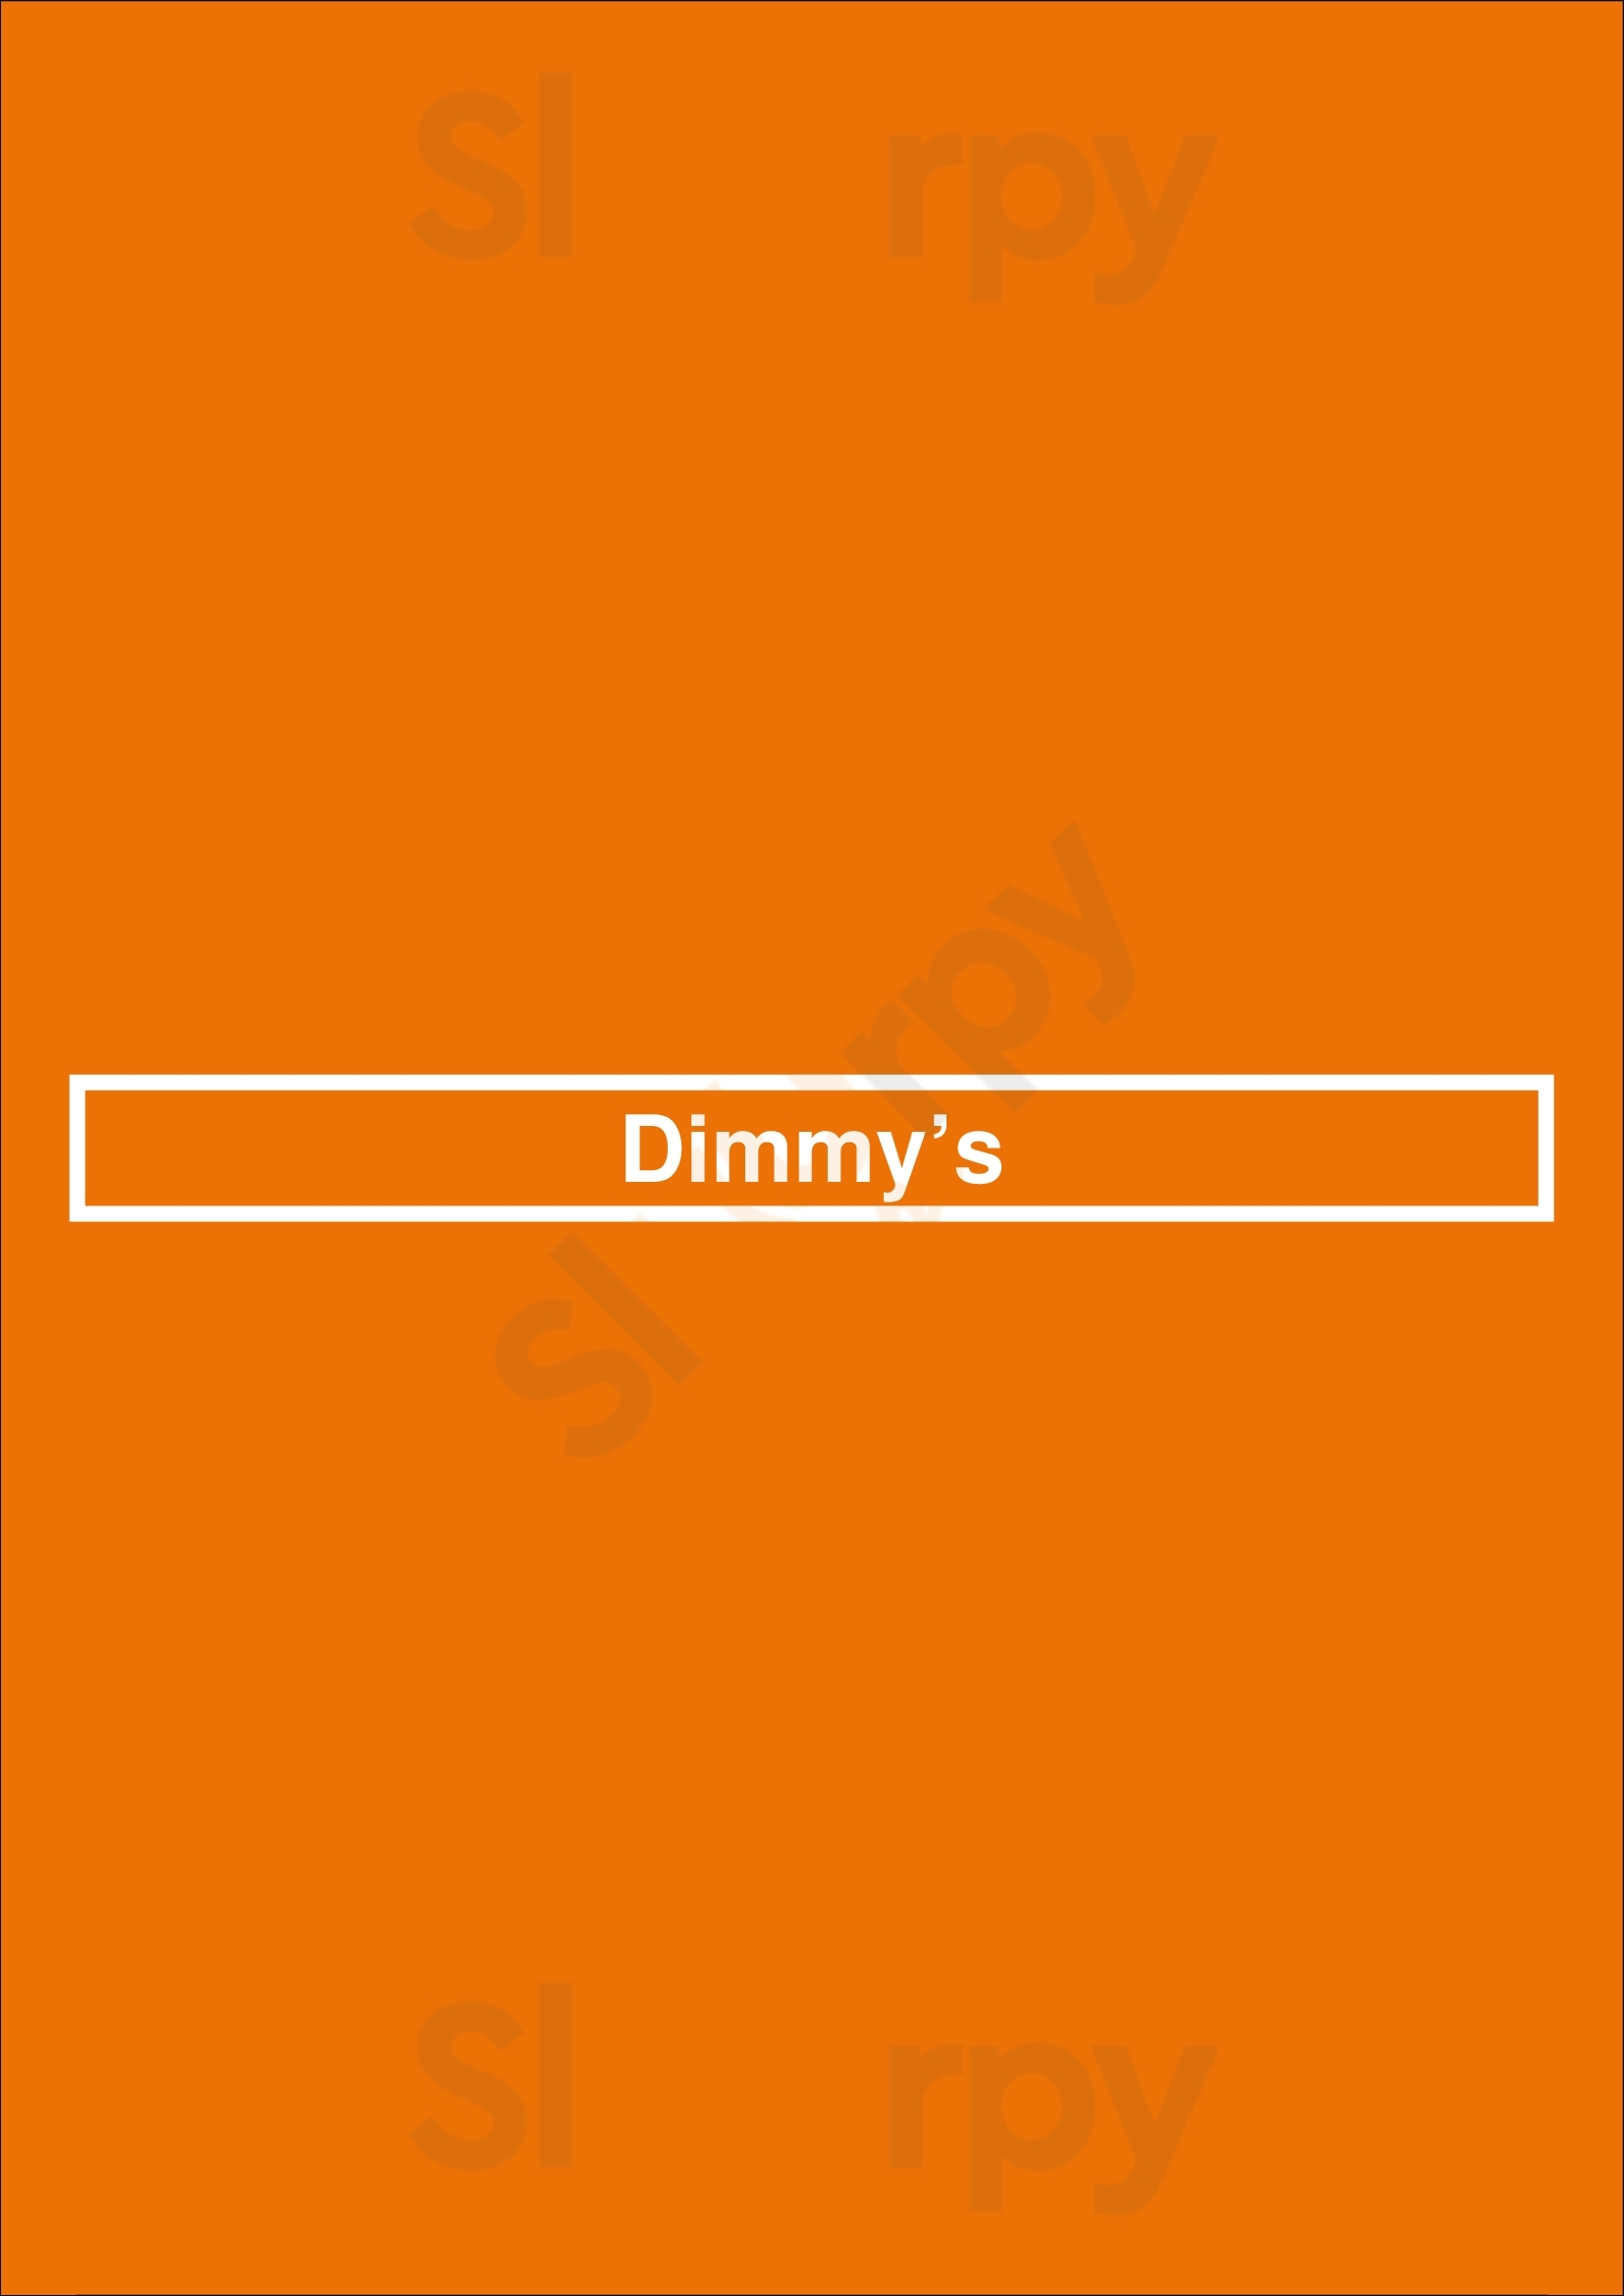 Dimmy’s Veldhoven Menu - 1